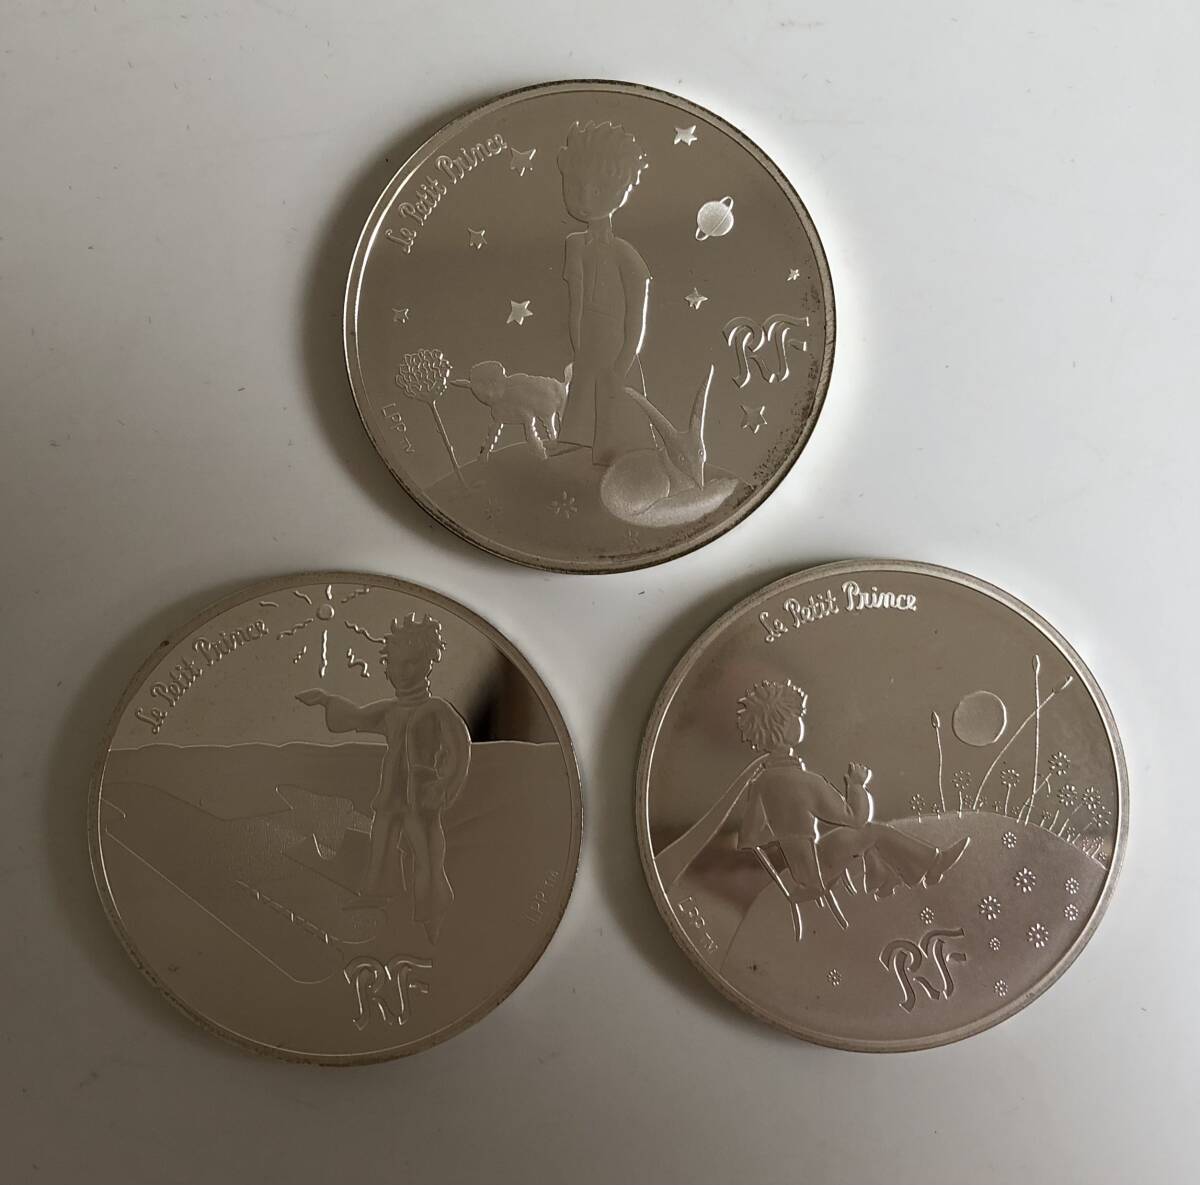 Le Petit Prince 星の王子さま フランス版発刊70周年記念コイン 2015 銀貨3種セット 10ユーロ銀貨 10euroの画像3